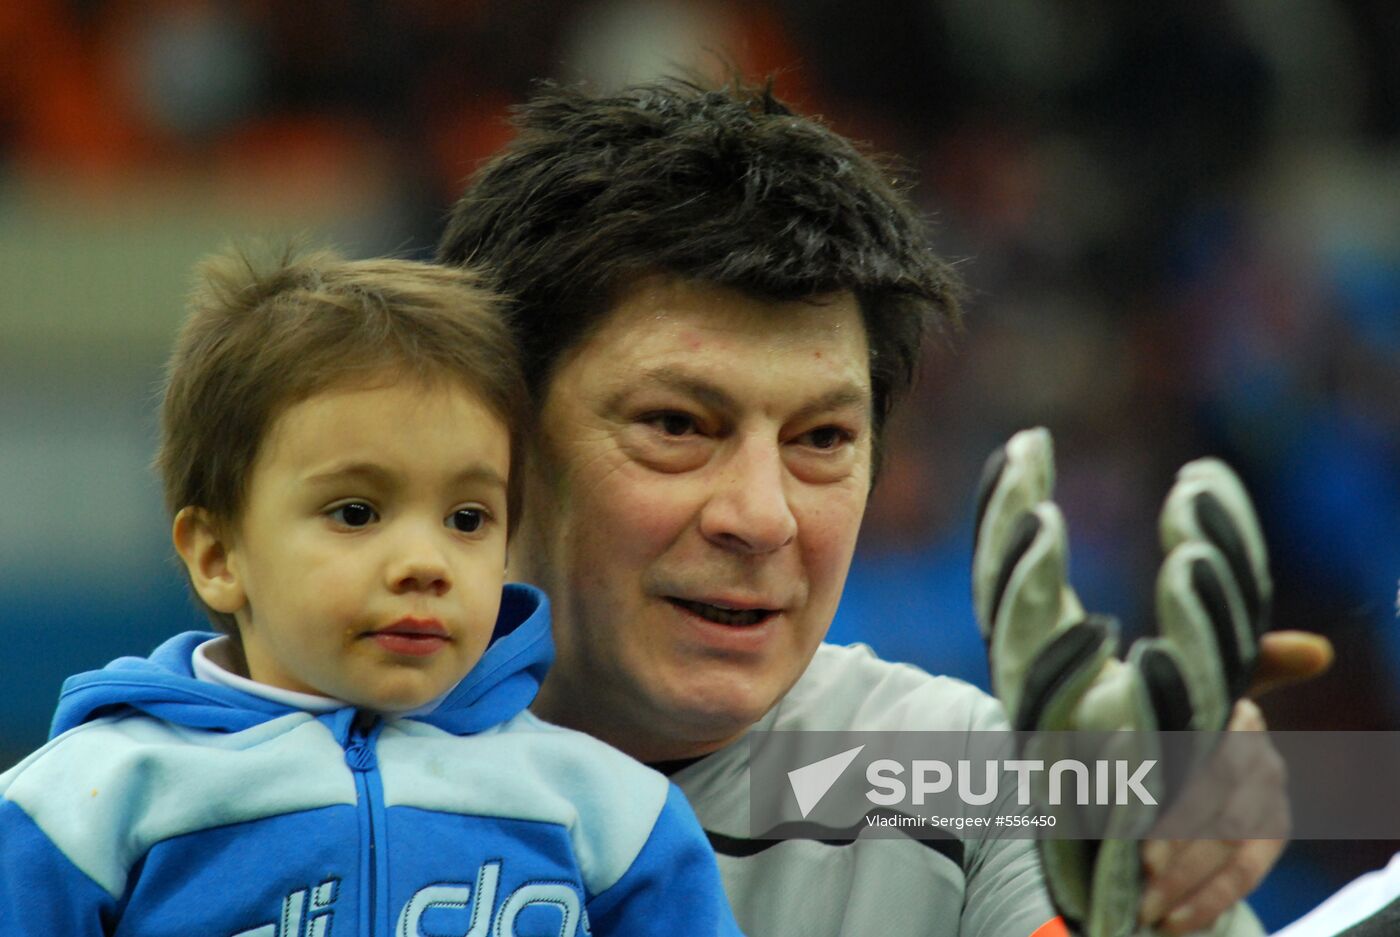 Rinat Dasayev with son